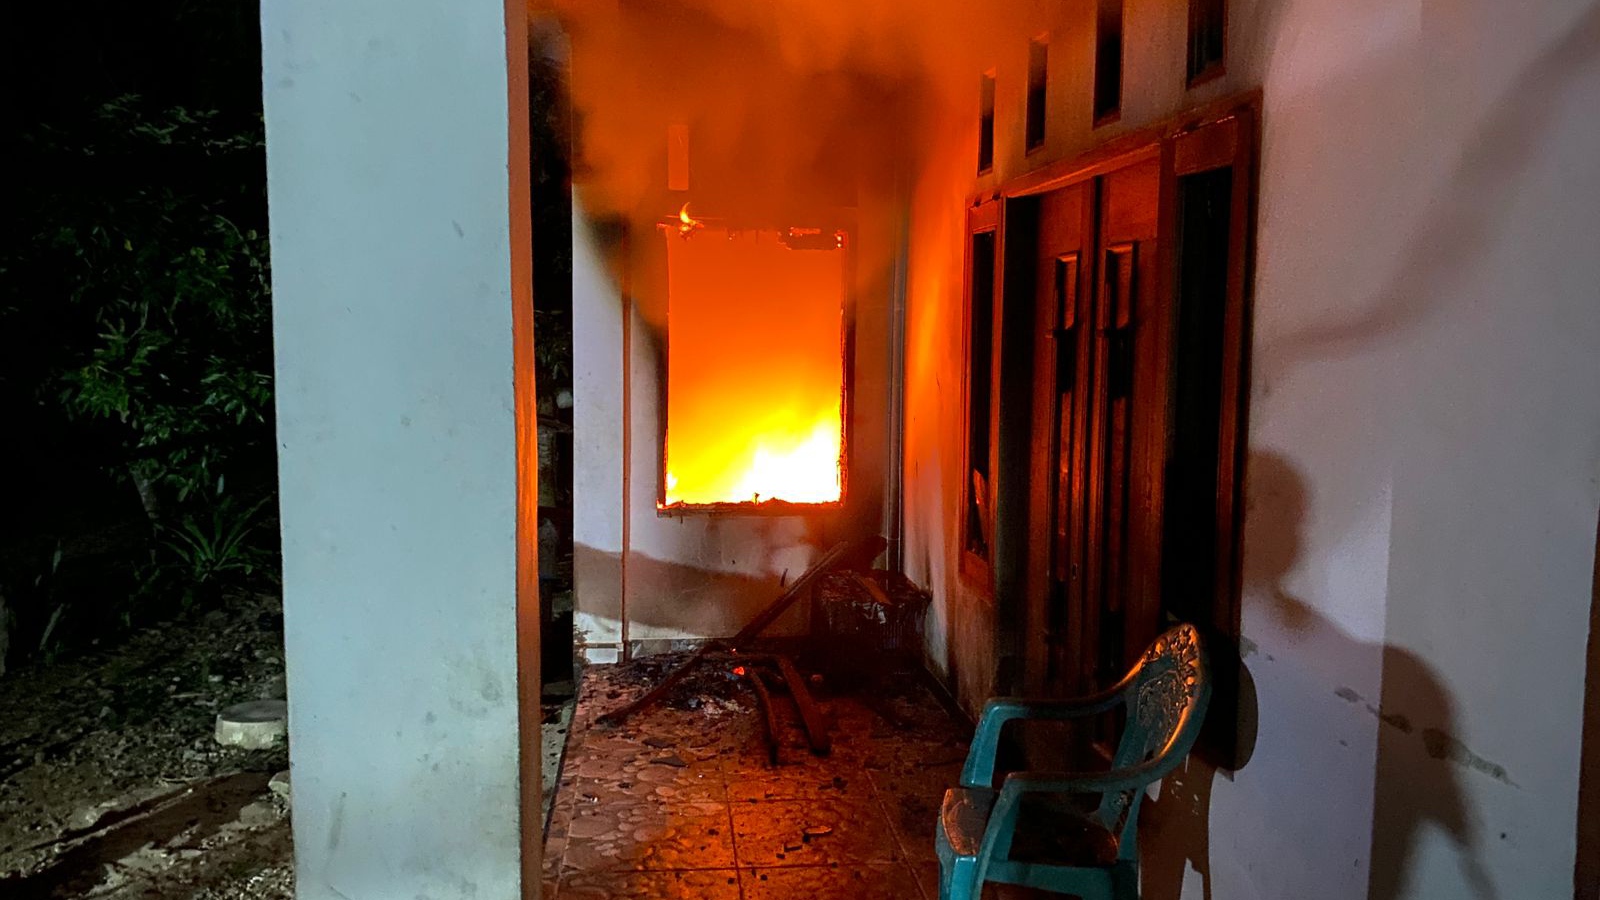 Ini Jumlah Rumah yang Dibakar di Belani Muratara, Menurut Laporan Korban 